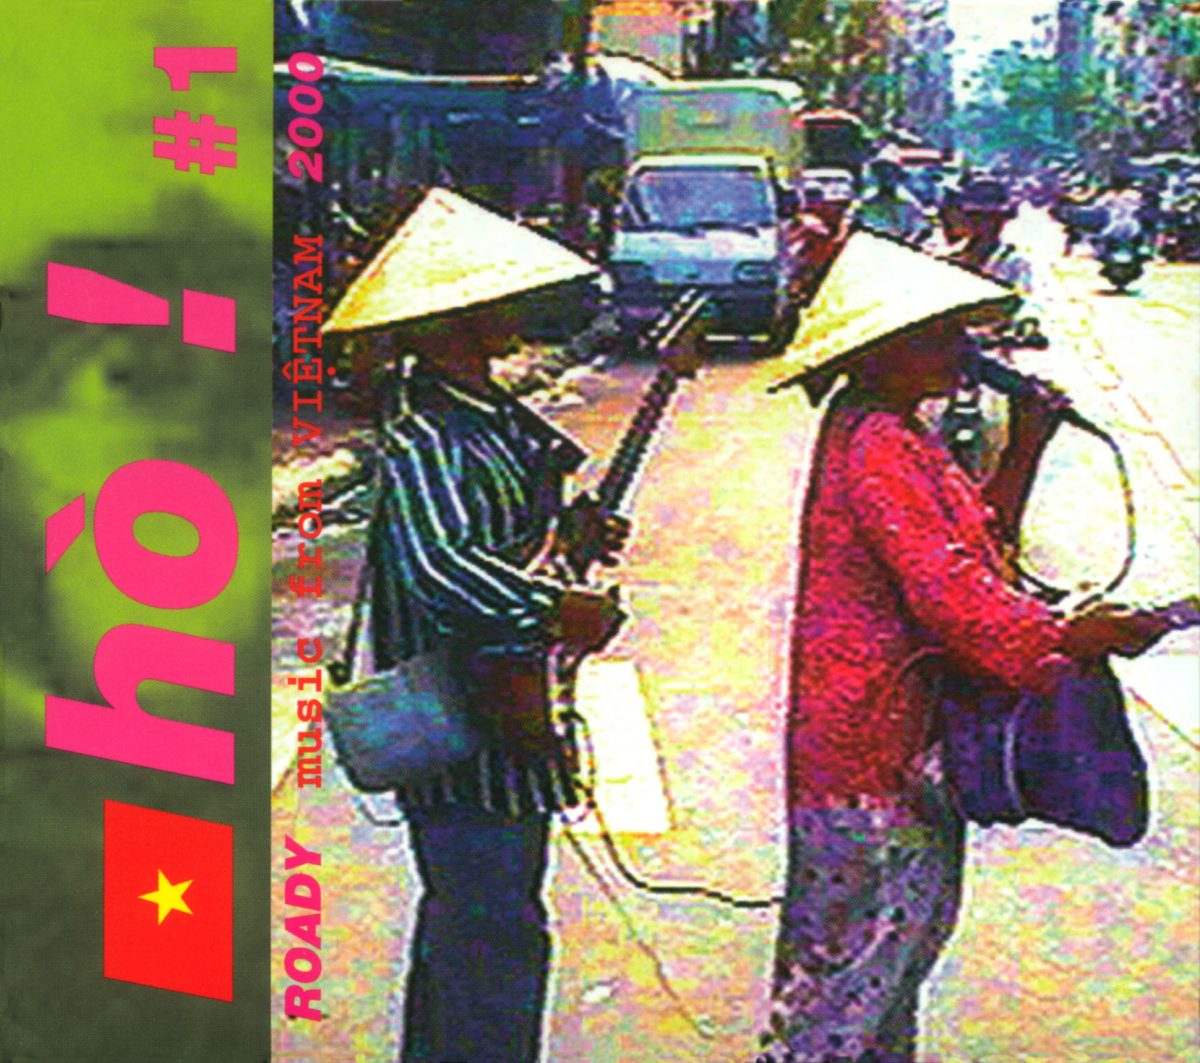 Ho! - Roady music from vietnam 2000